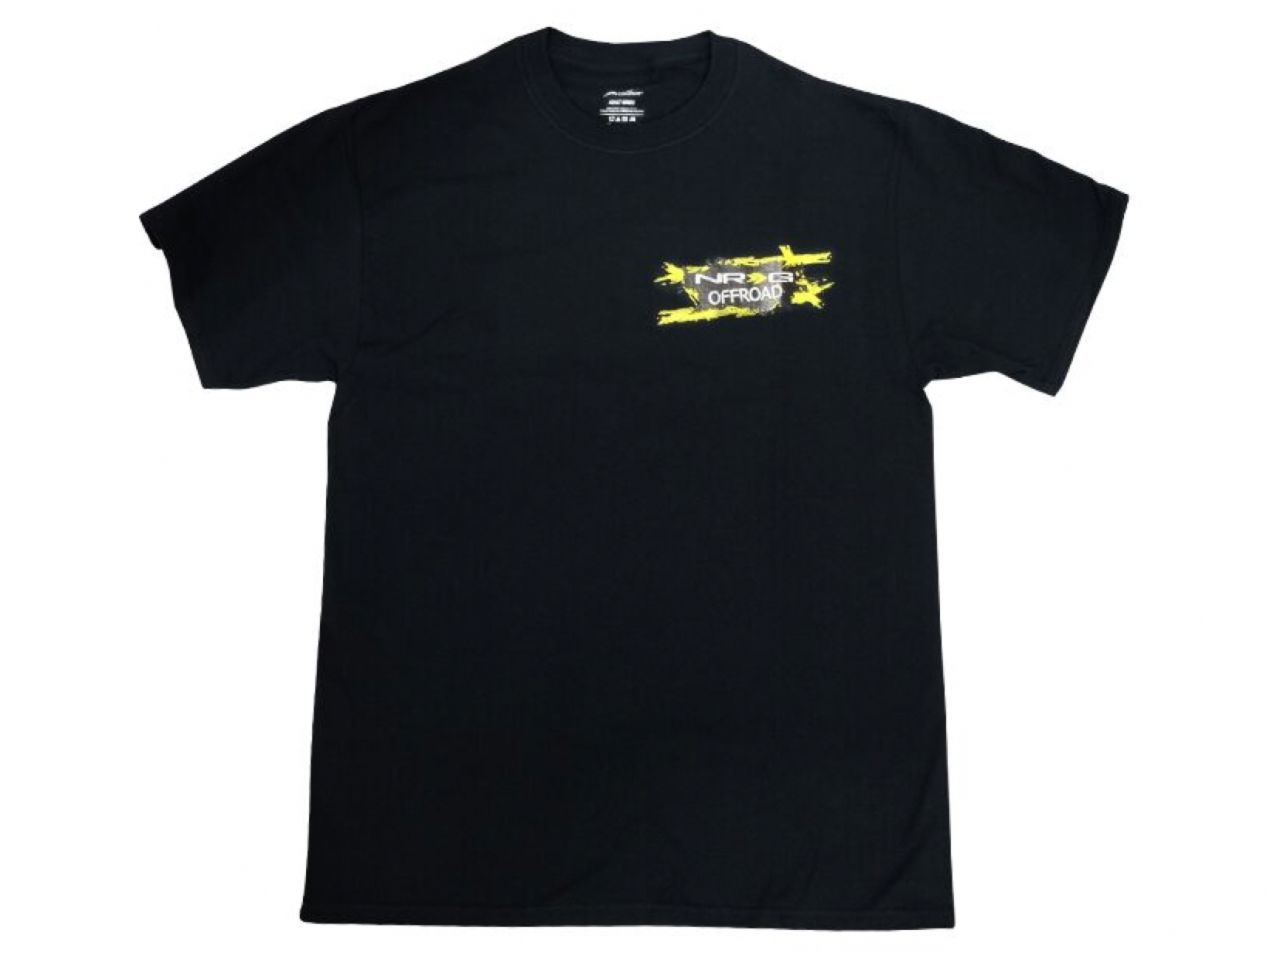 NRG  Offroad Quick Release diagram shirt Black-  M, L, XL, XXL